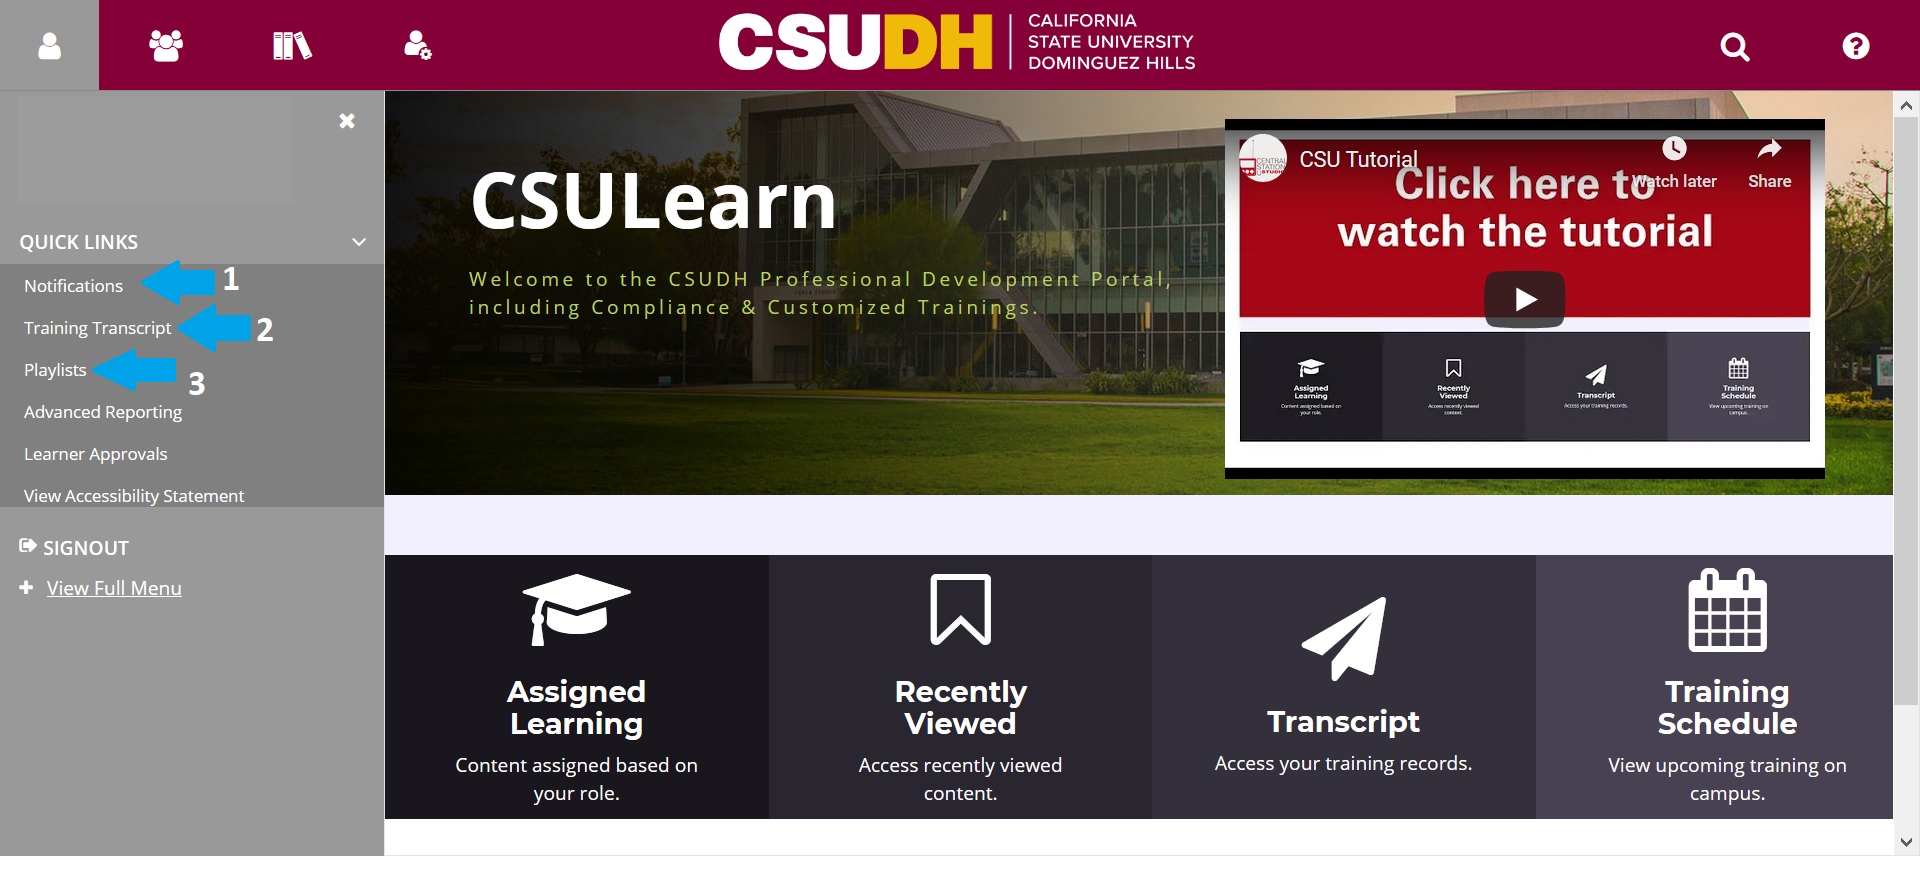 CSU Learn Quick Links 